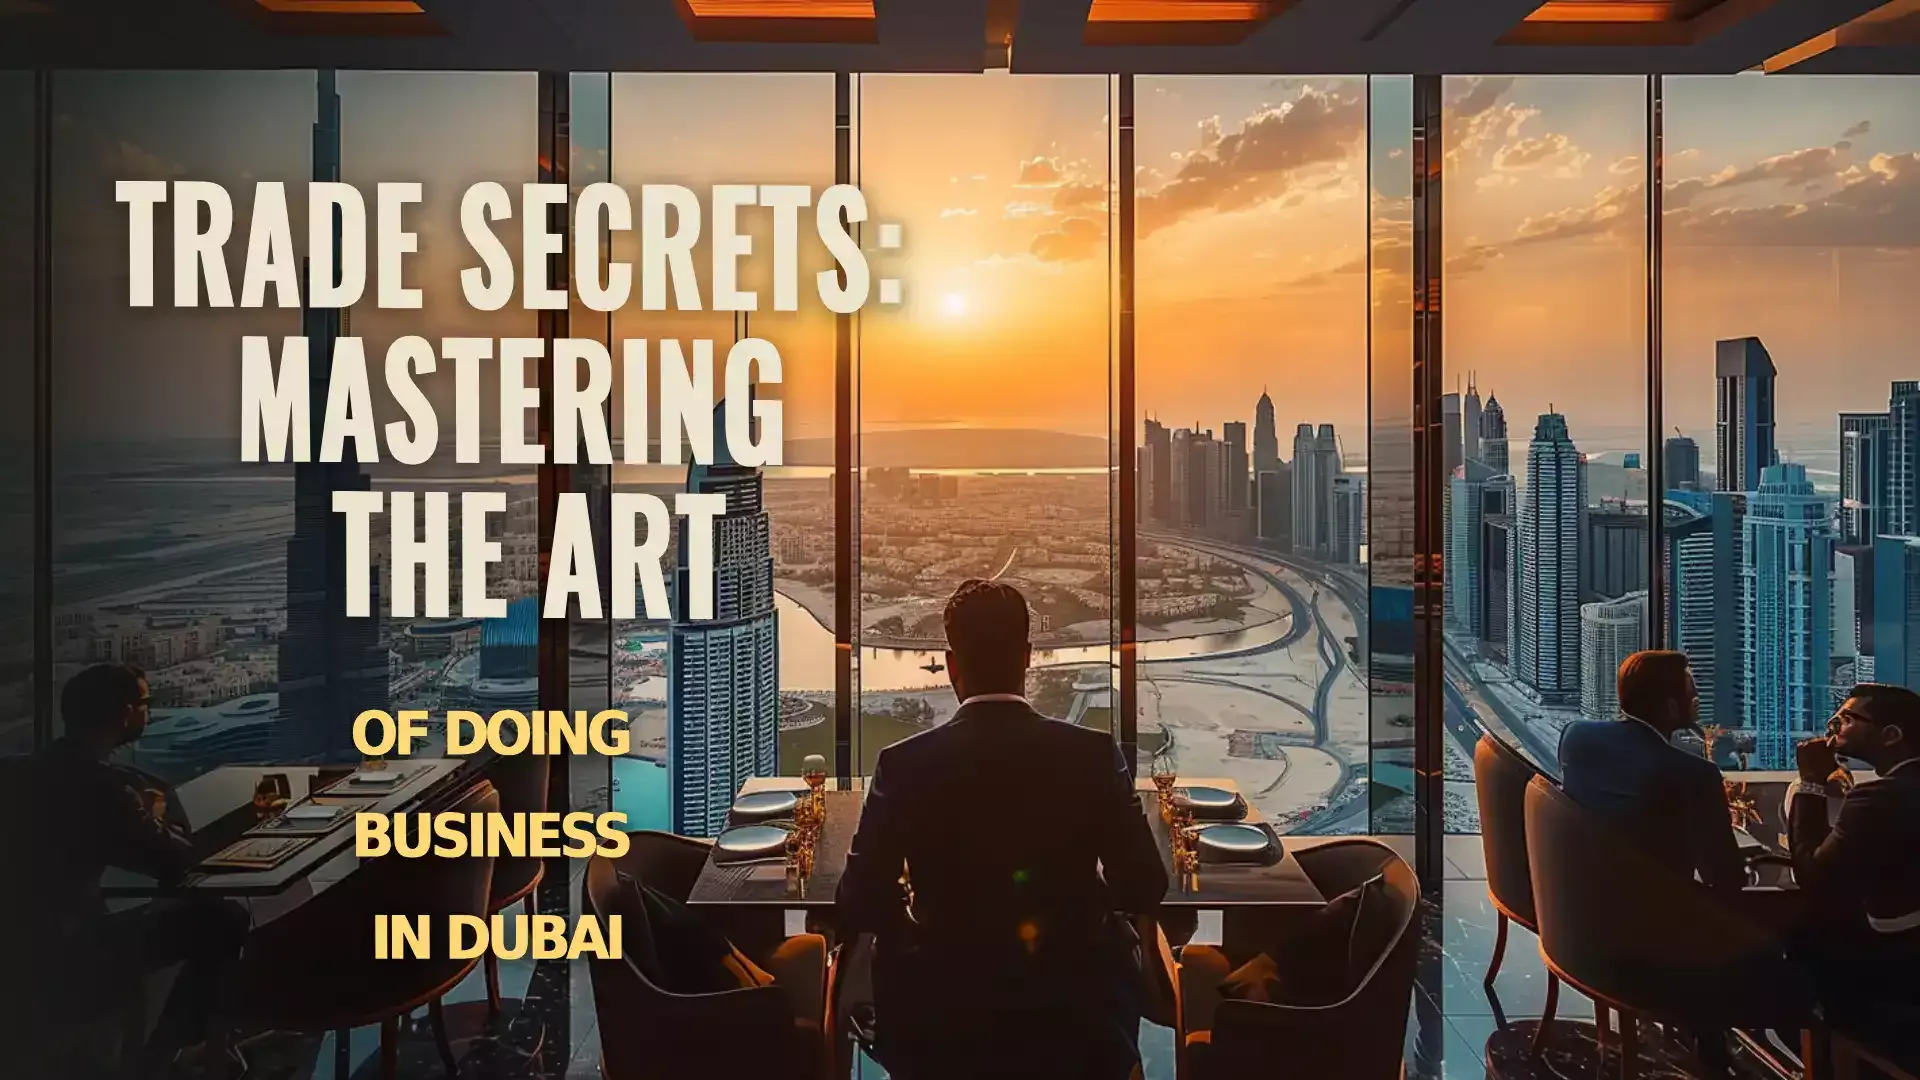 Image illustrating strategies for doing business in Dubai